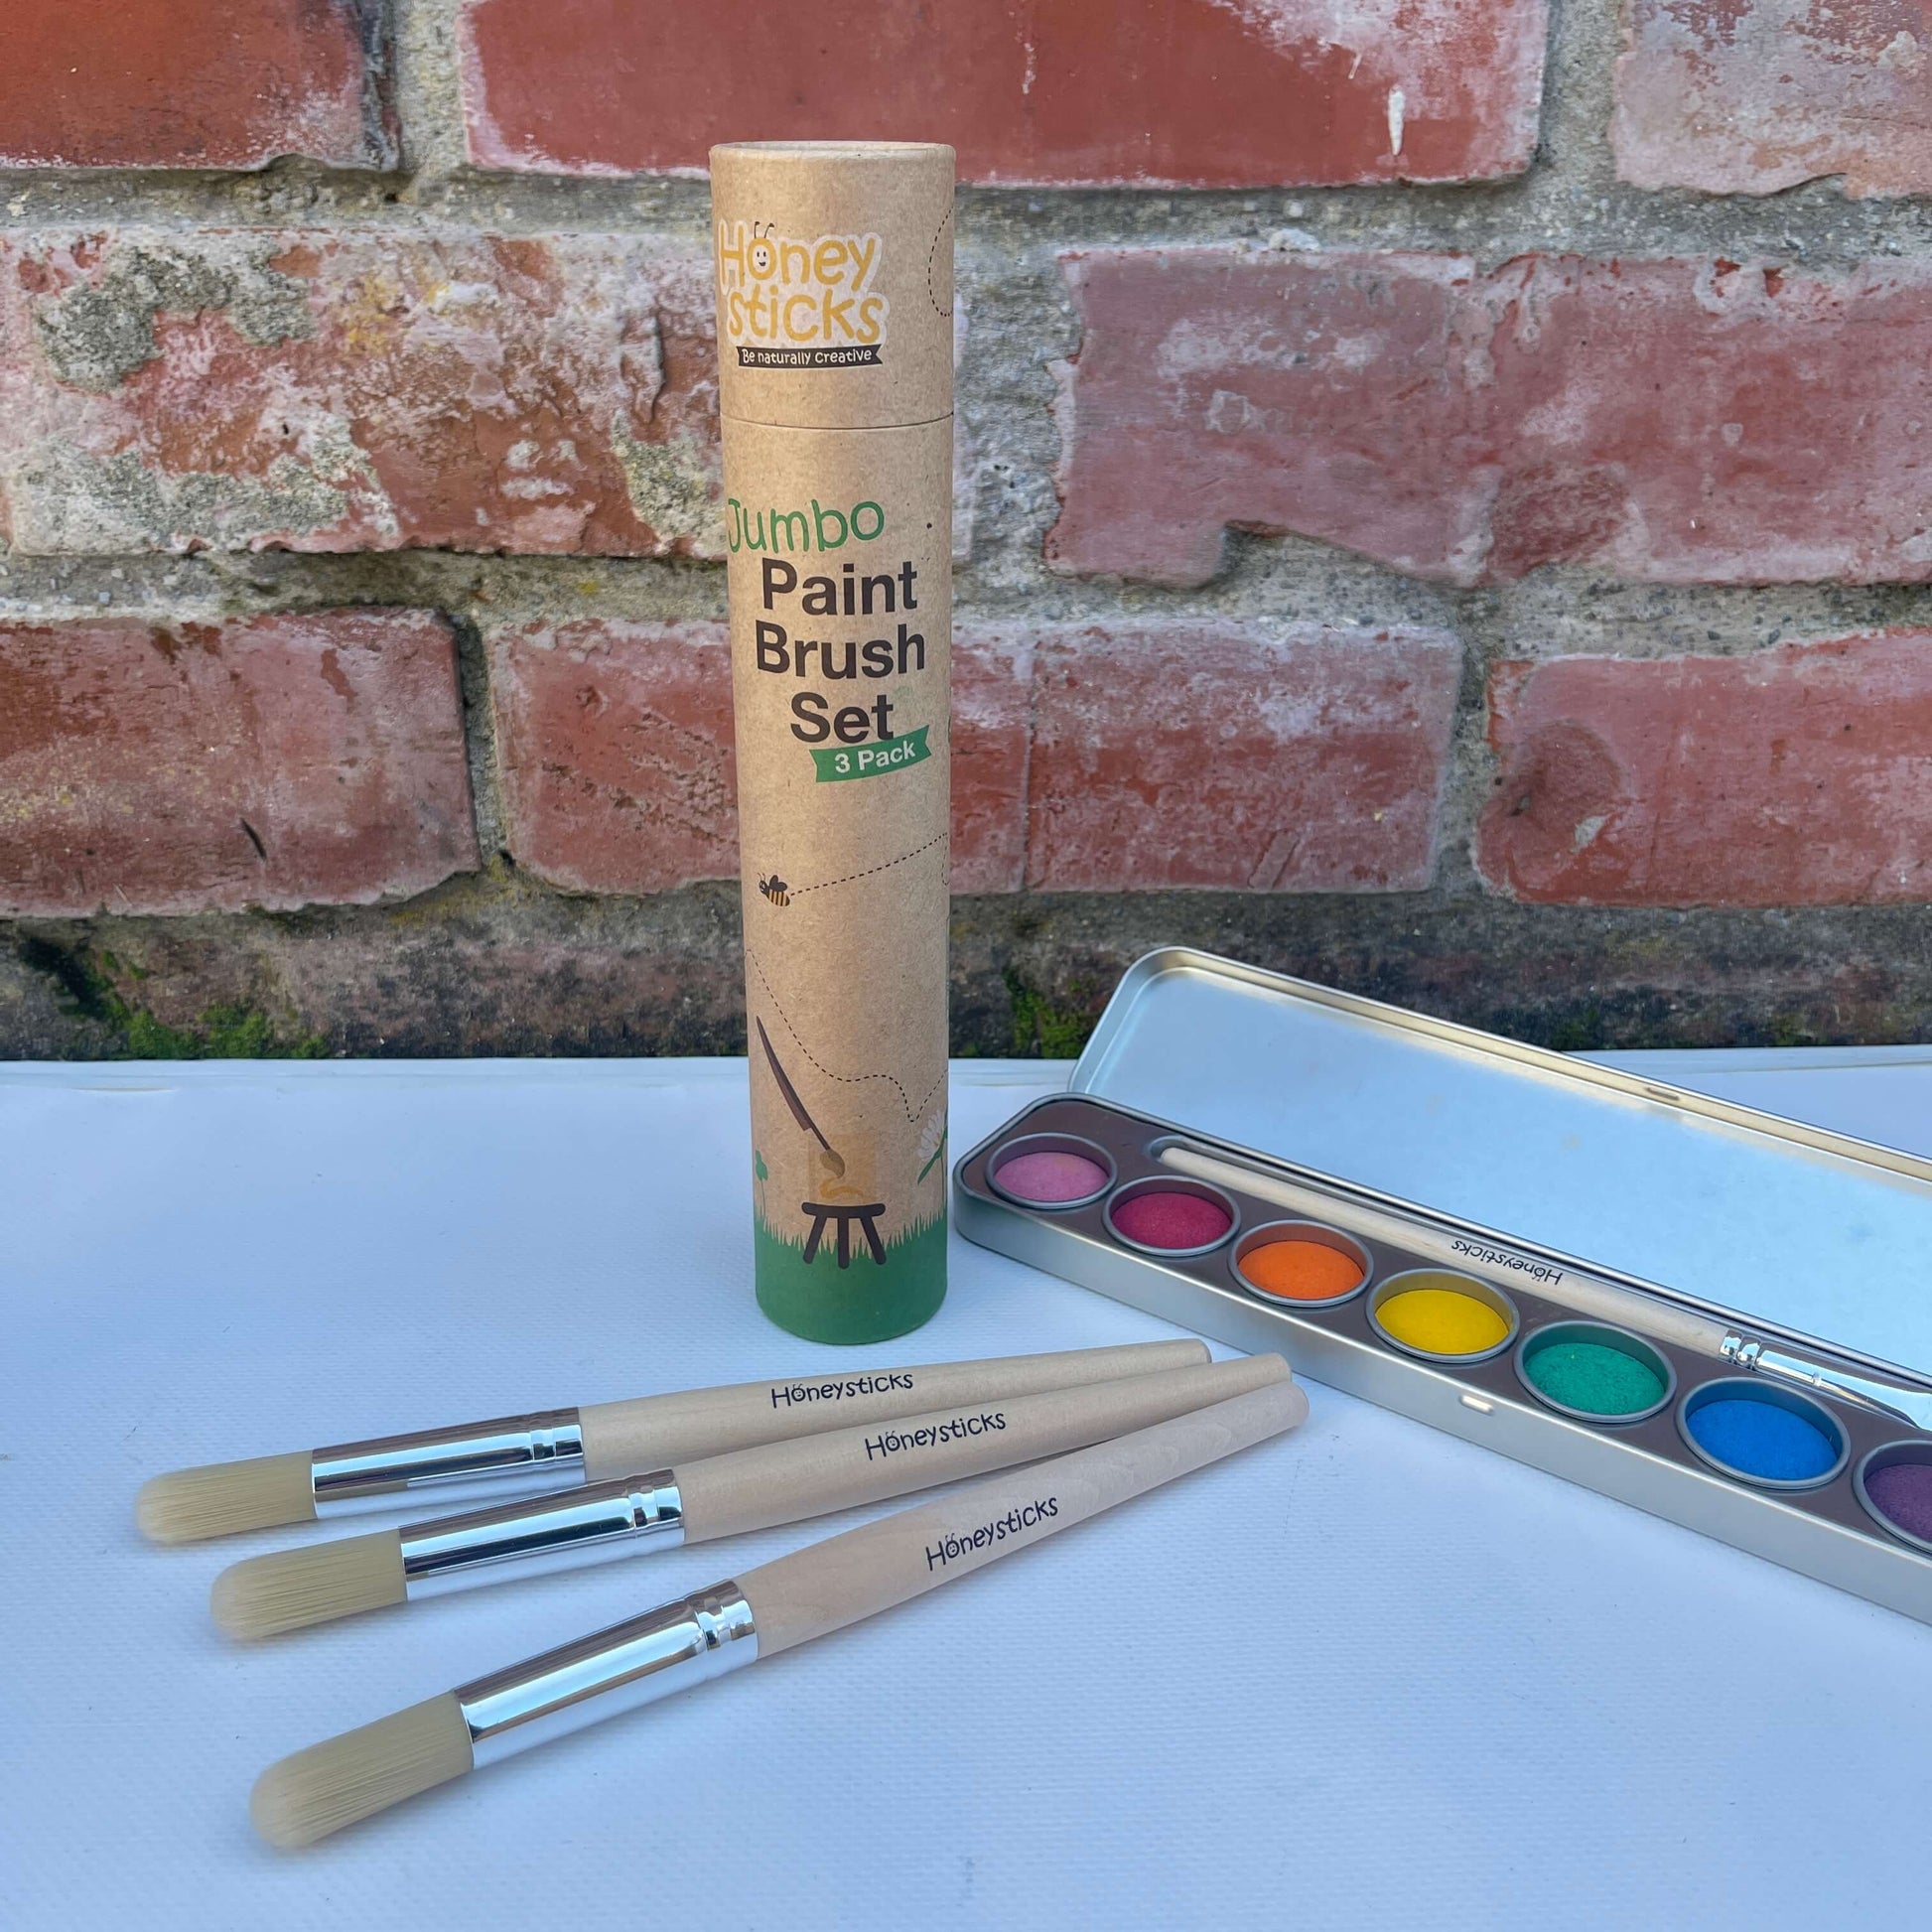 Honeysticks My First Paint Brush Set - 3 Pack